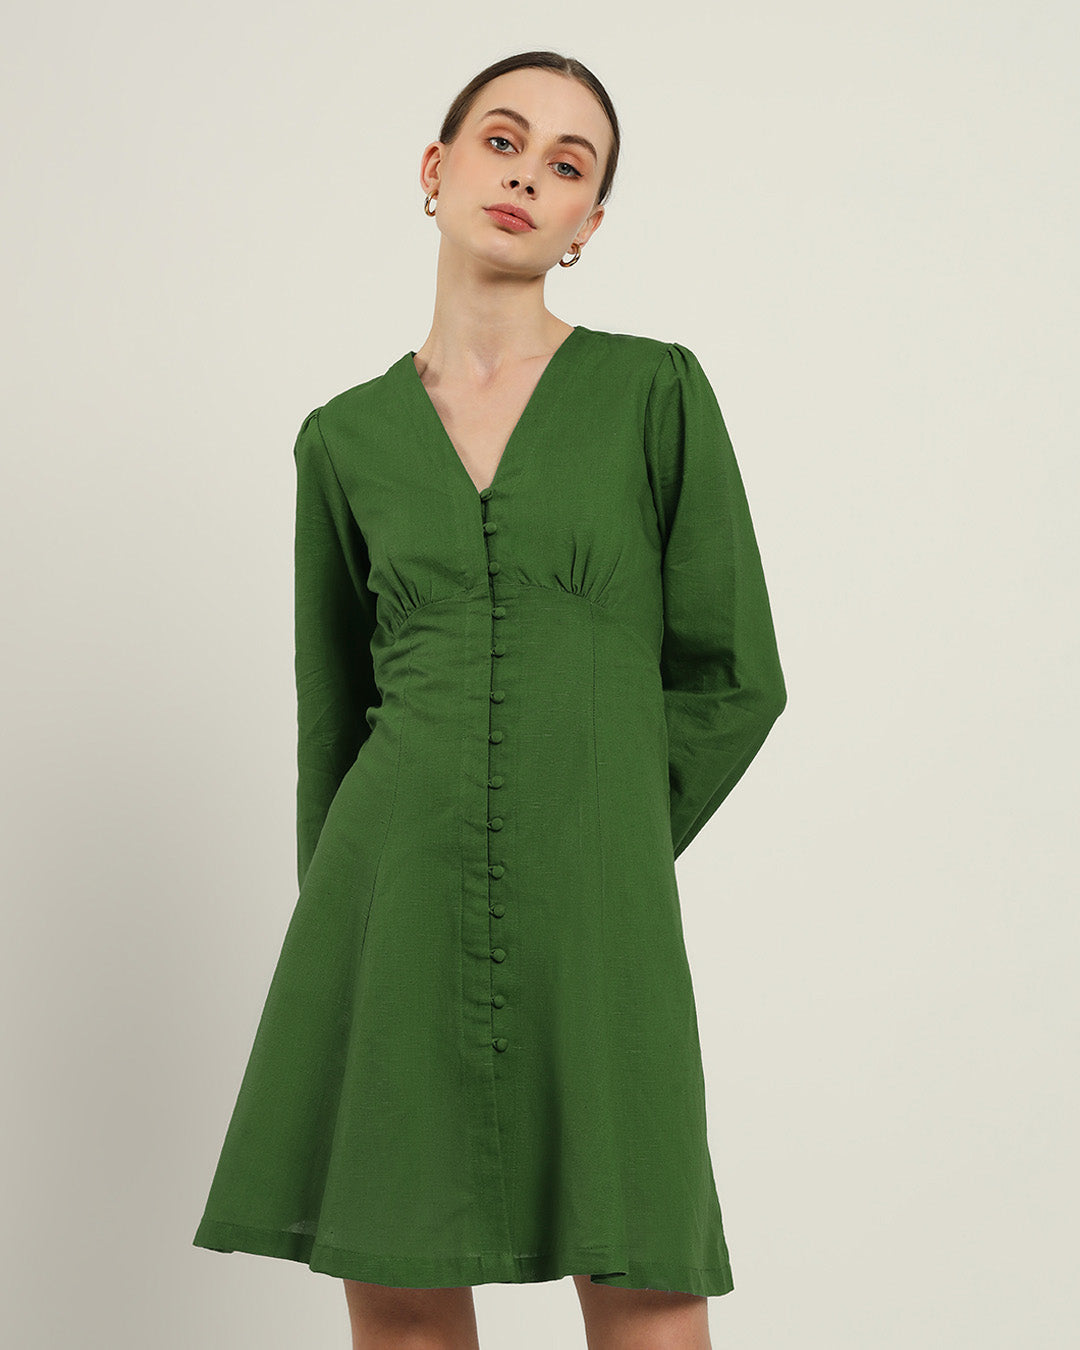 The Dafni Emerald Cotton Dress